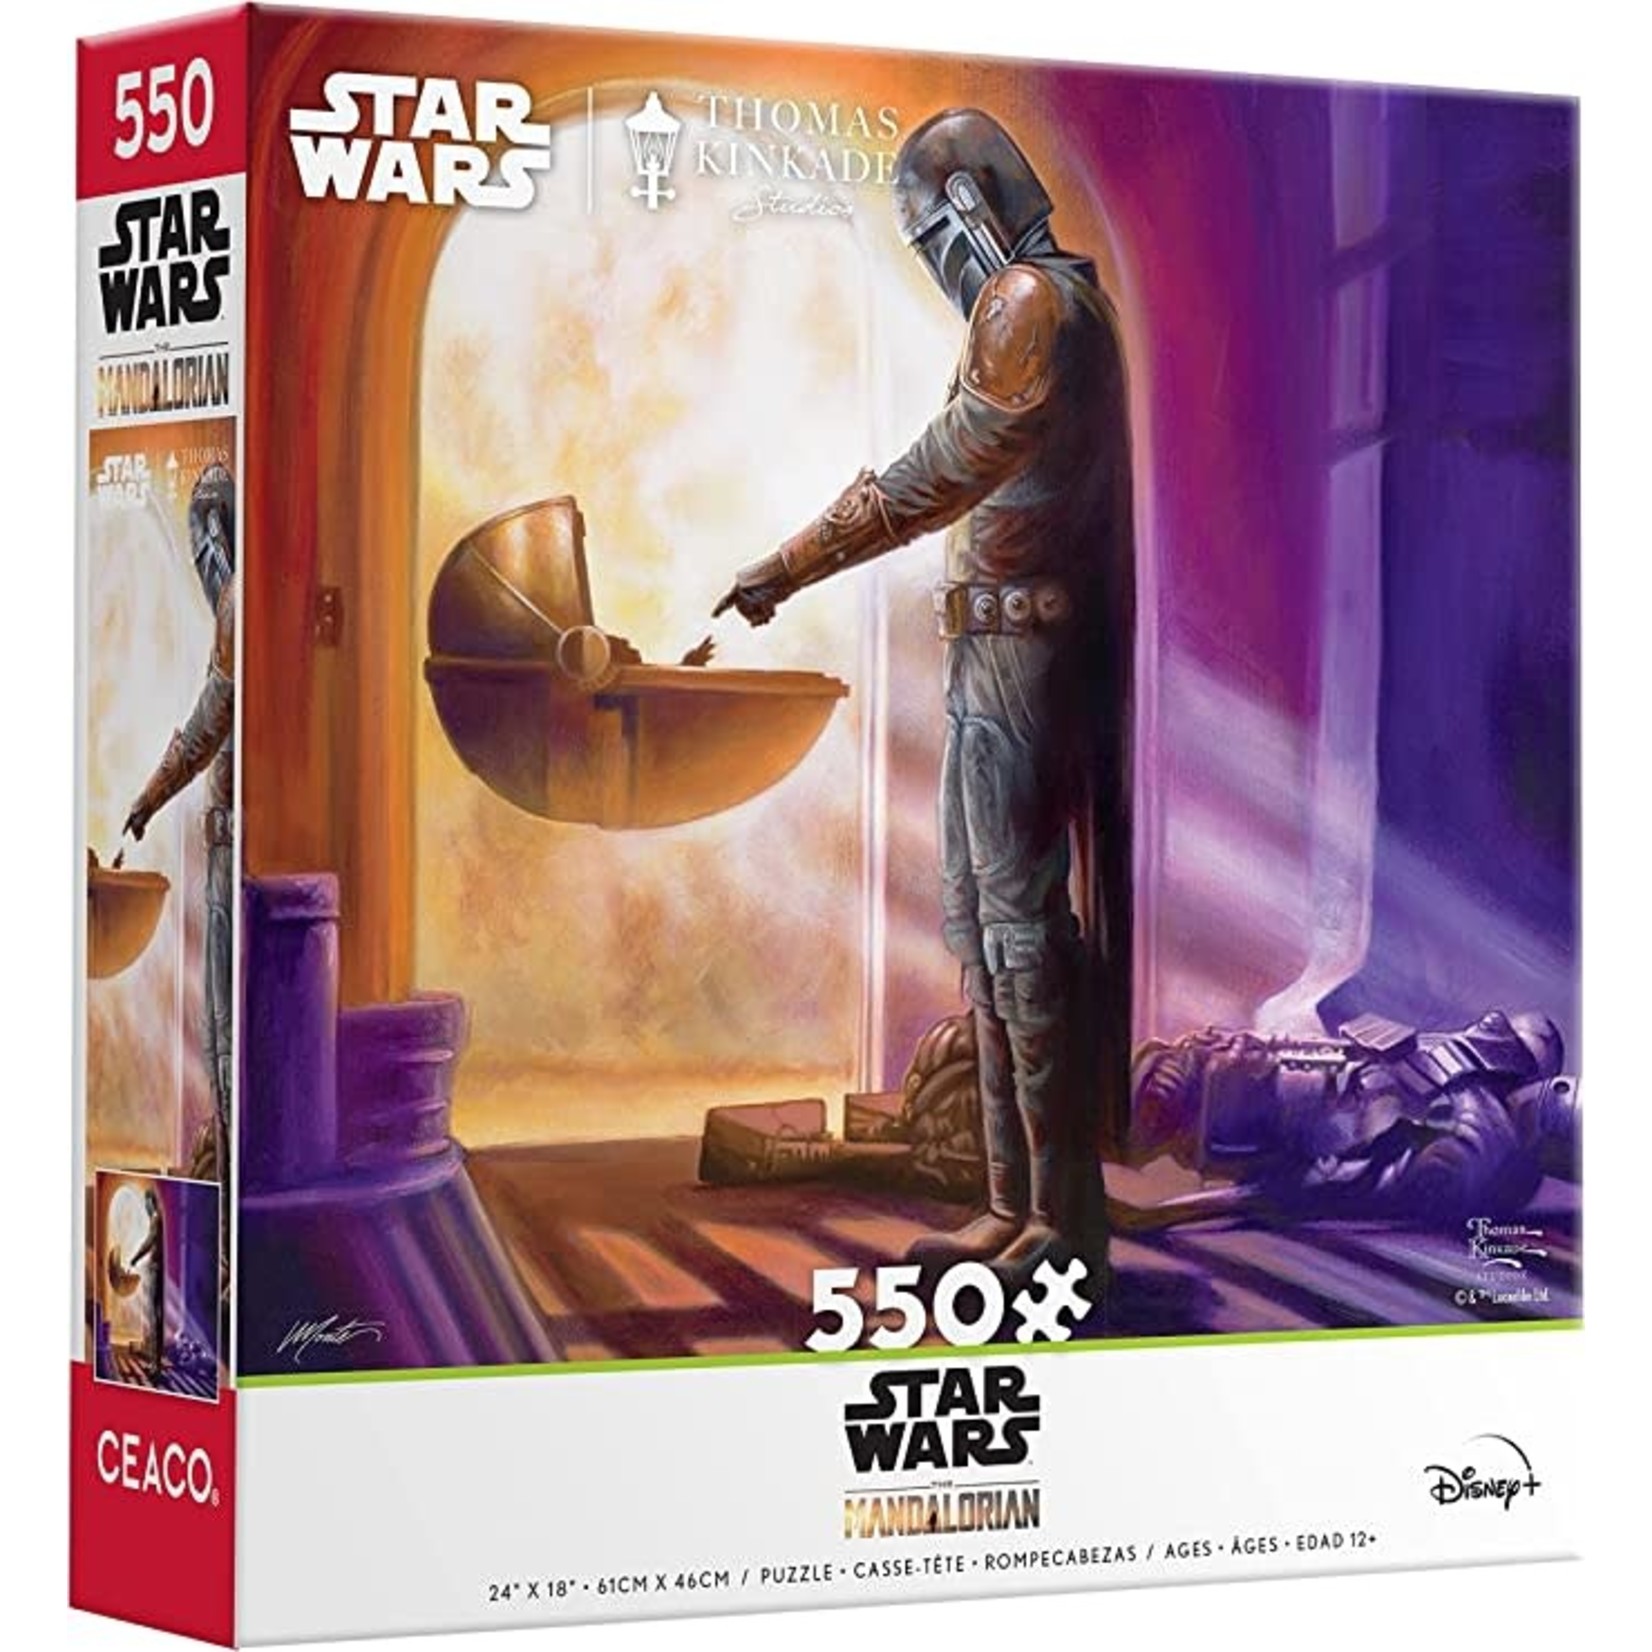 Ceaco Star Wars Mandalorian: Turning Point by Thomas Kinkade Studios, 550-Piece Jigsaw Puzzle